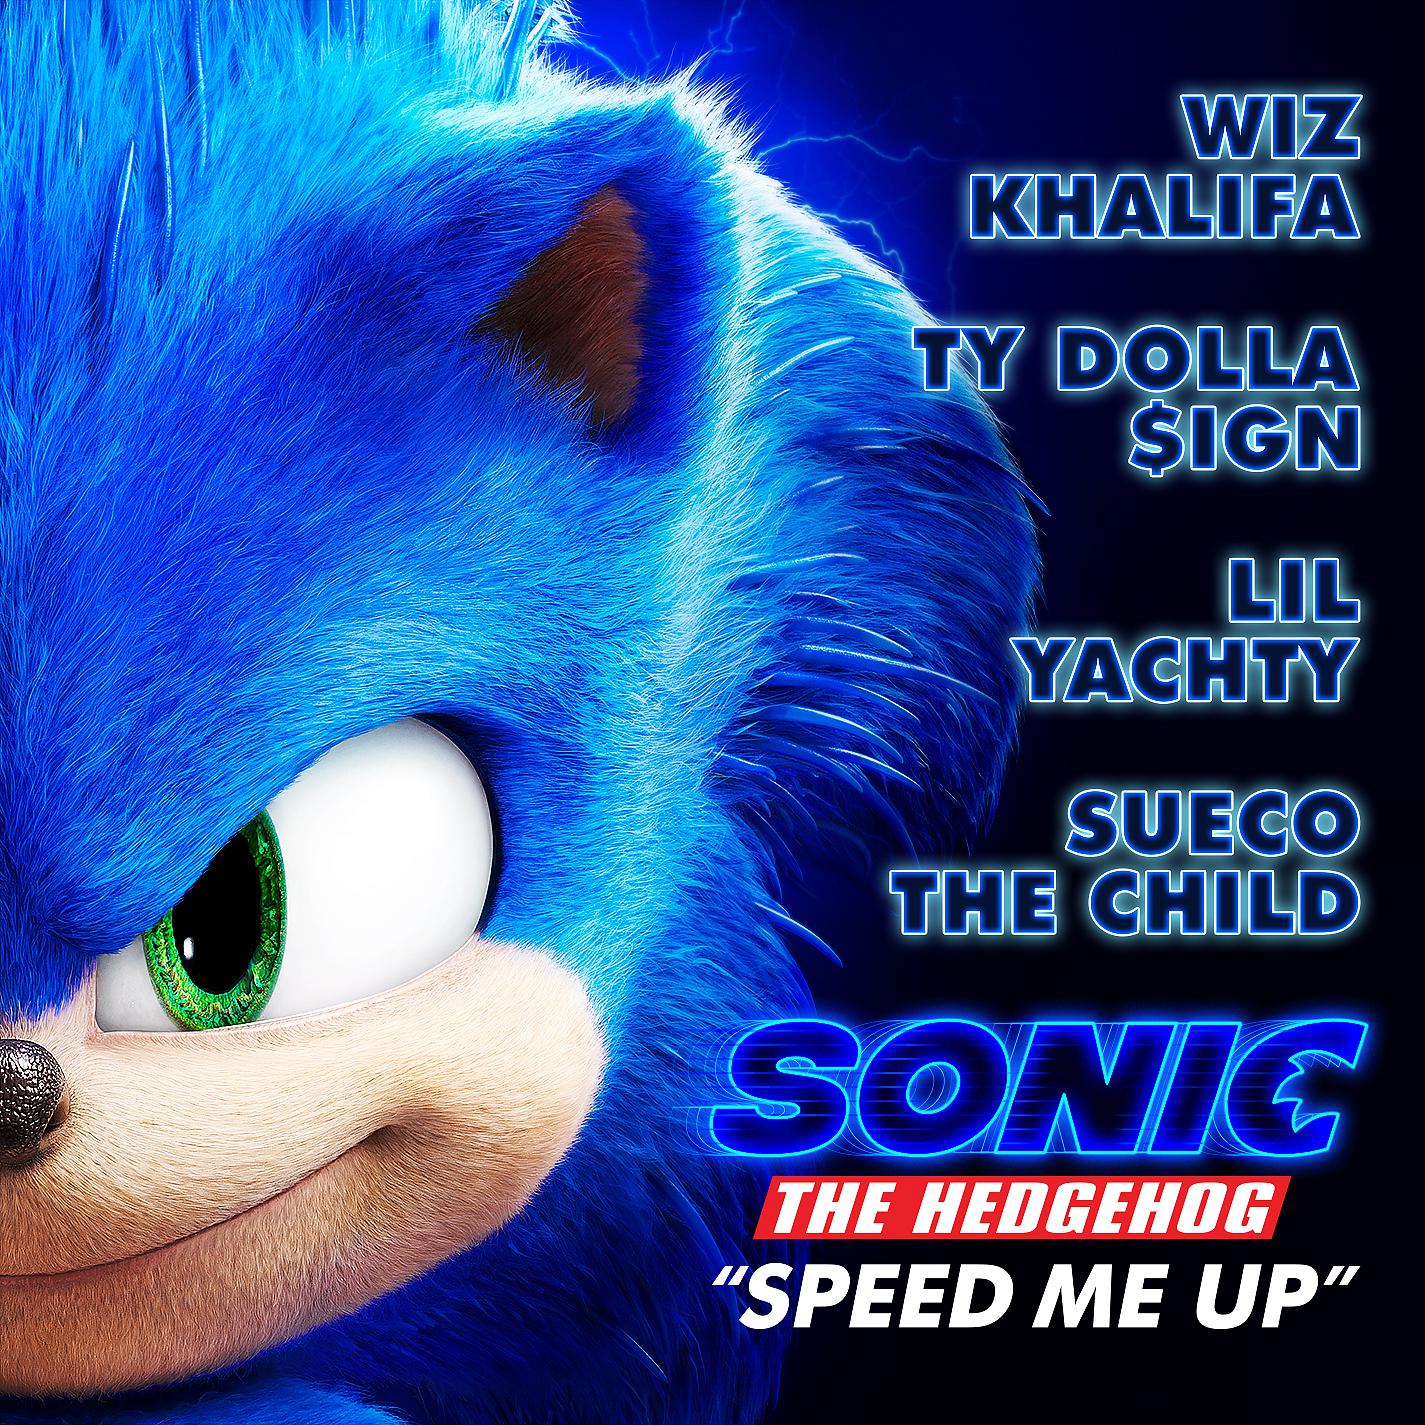 Speed up песни полностью. Speed me up. Sonic. Соник 2020. Скорость Соника.